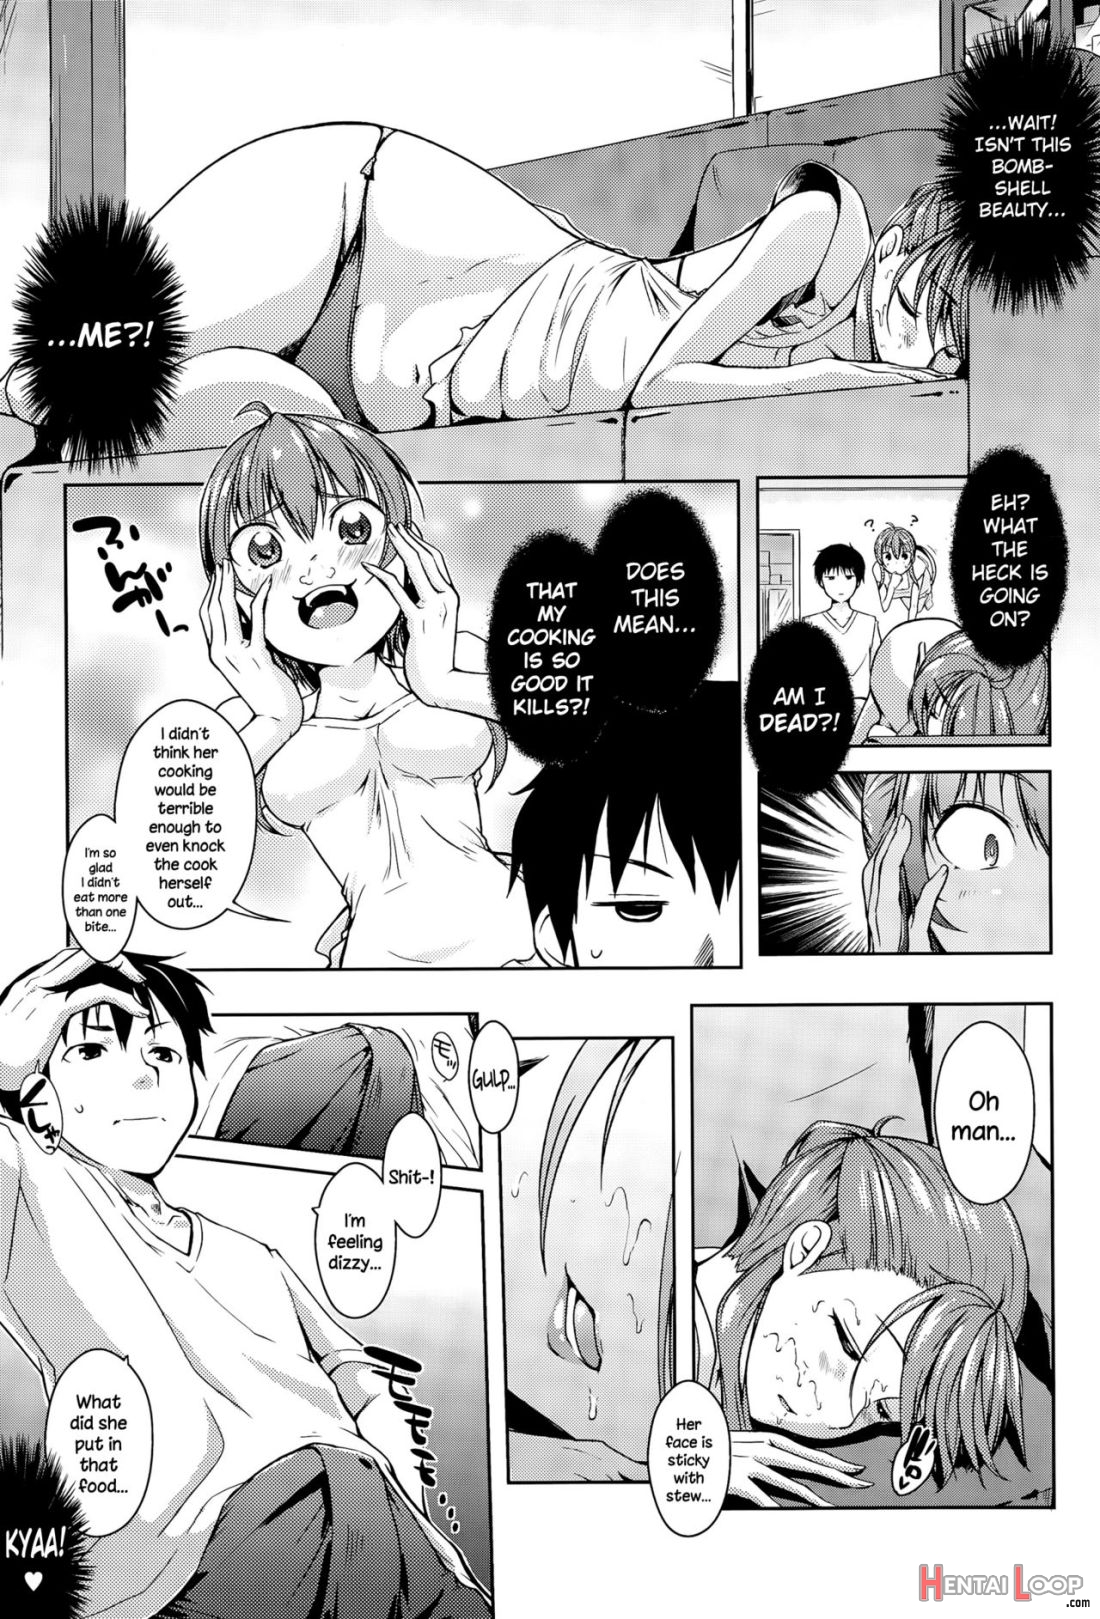 Yumeyura Morning page 5